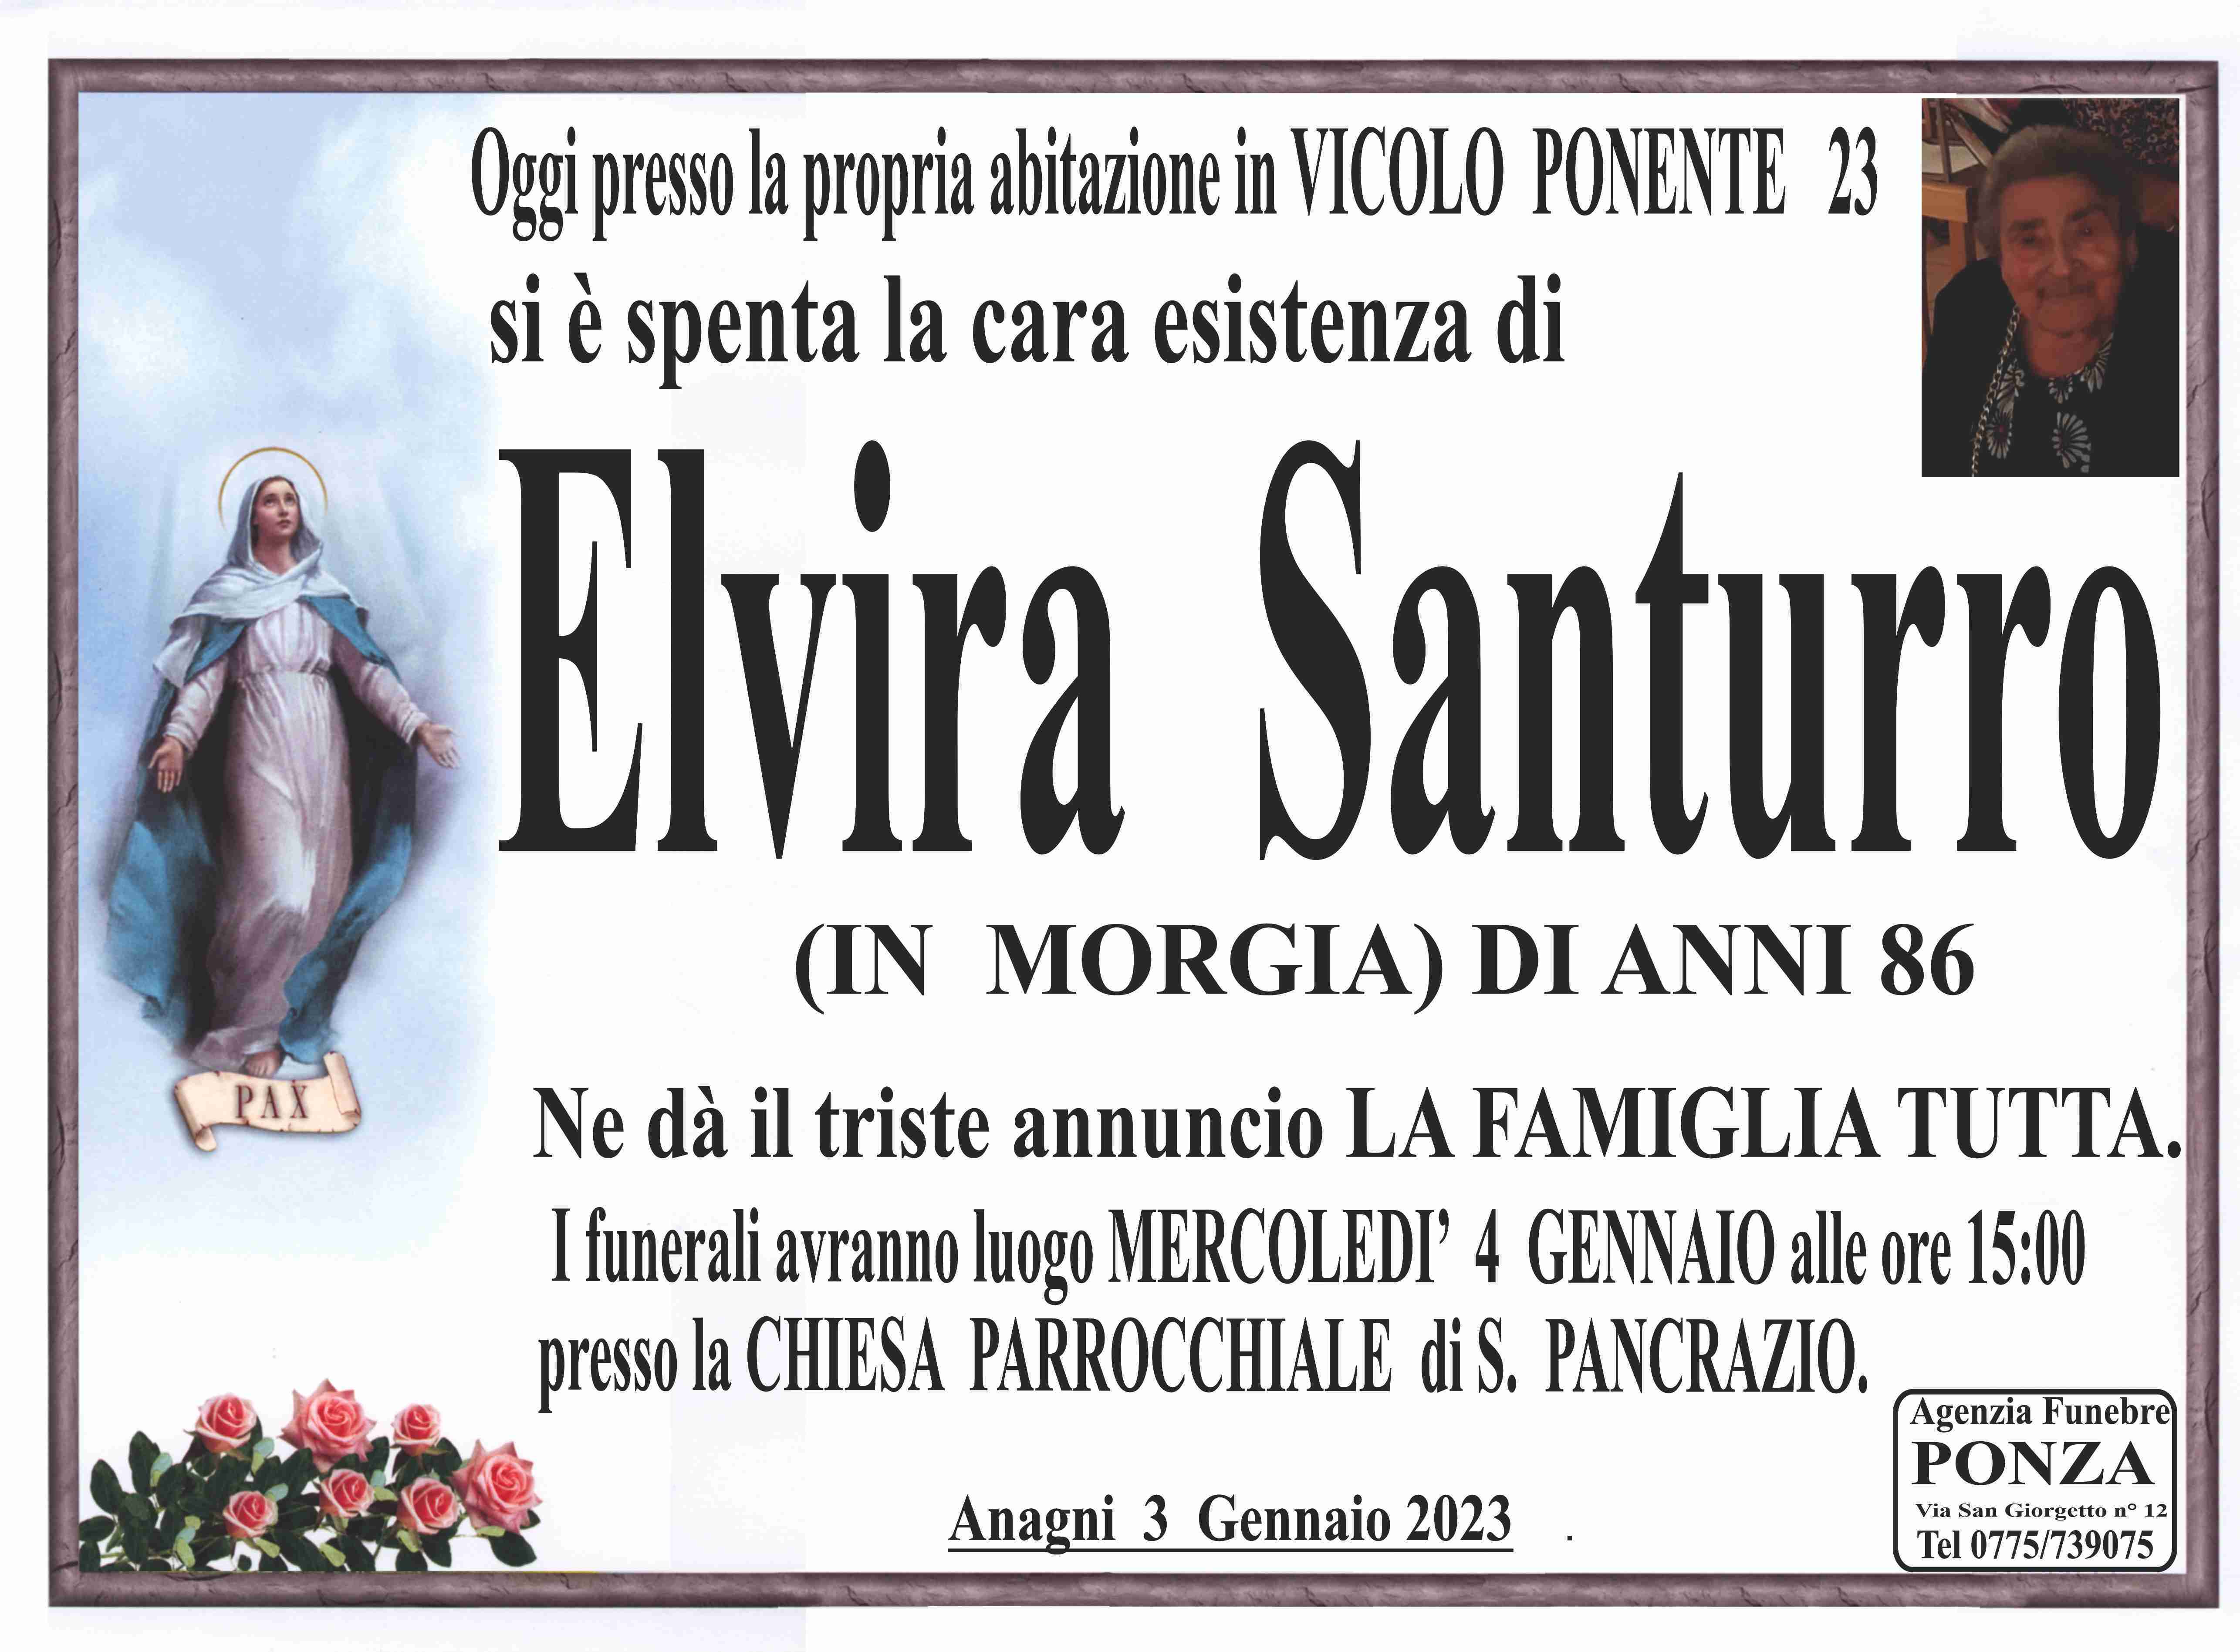 Elvira  Santurro